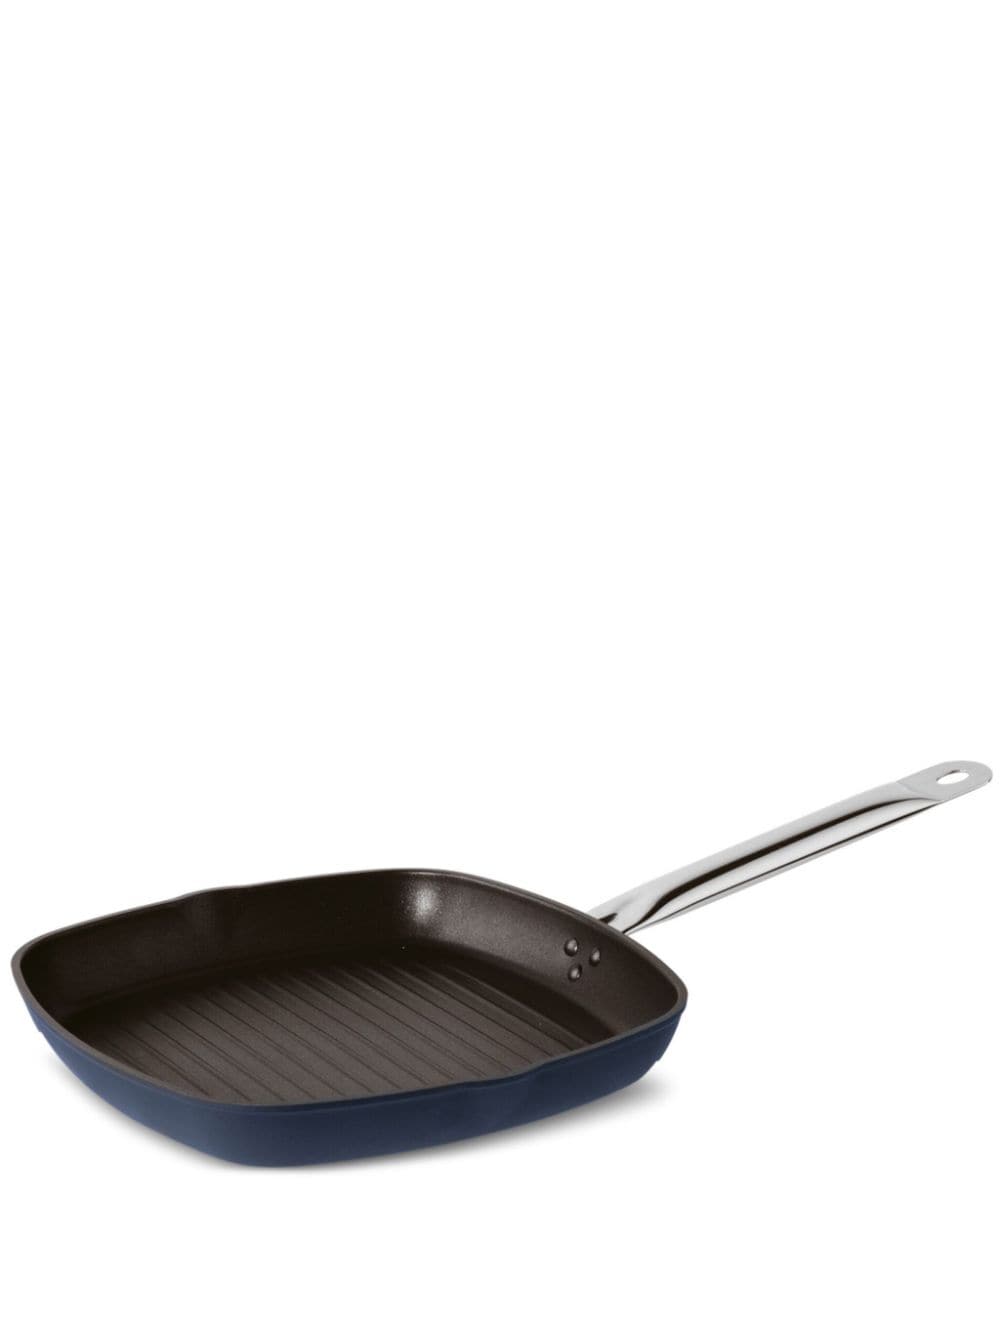 Sambonet matte grill pan (28cm) - Blue von Sambonet